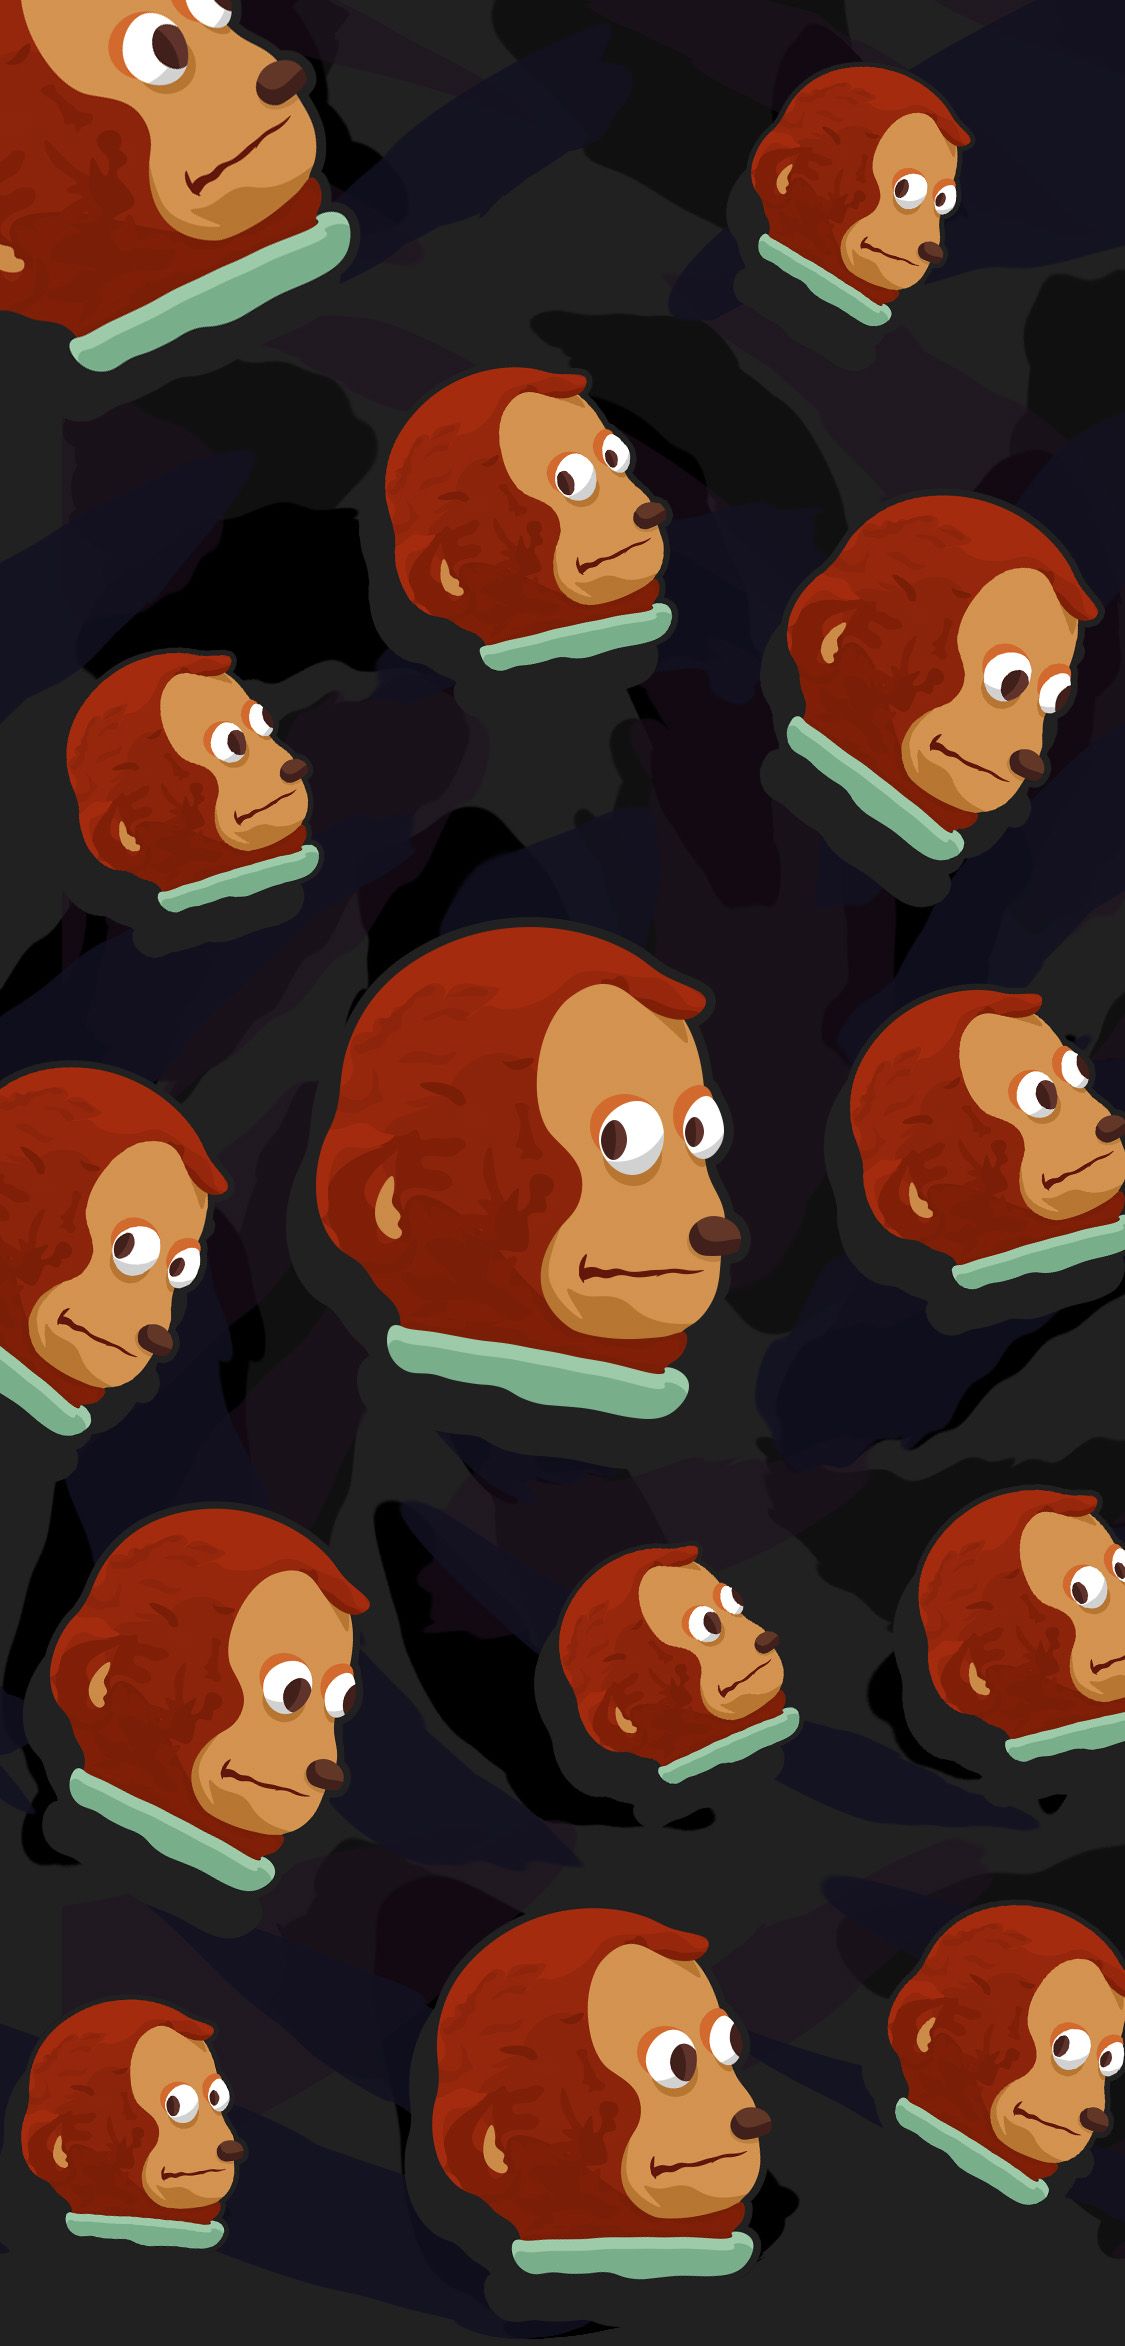 Monkey Puppet Meme Cursor Phone Wallpaper. Monkey puppet, Puppets, Memes